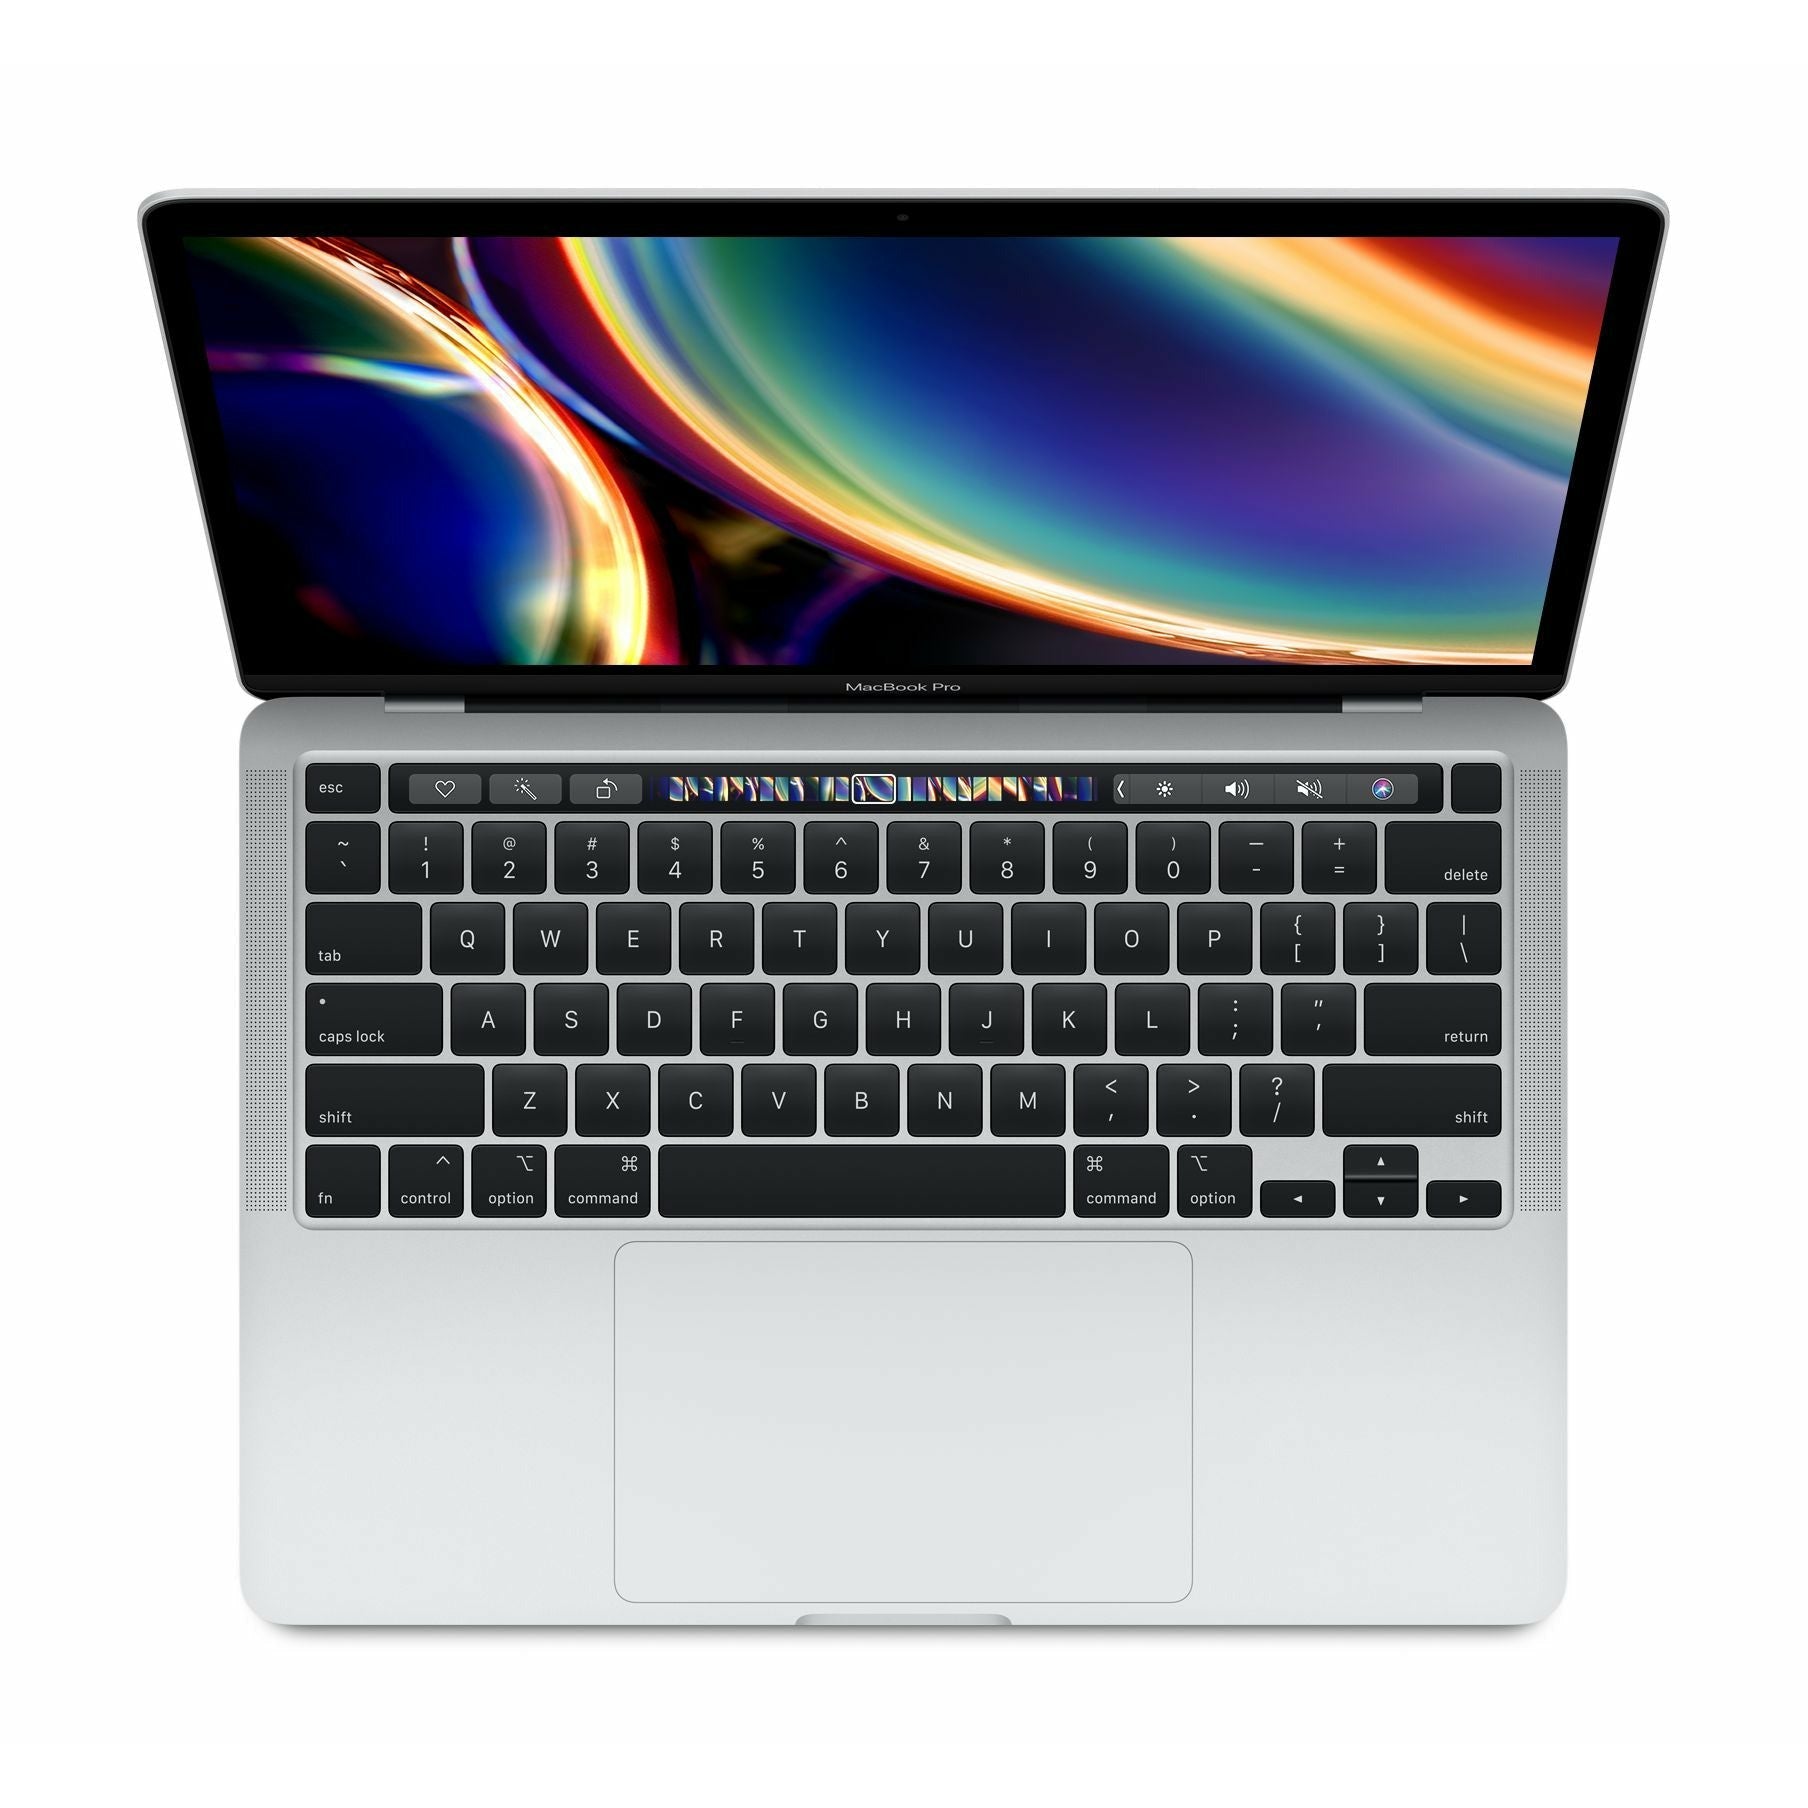 Apple MacBook Pro 13-inch Laptop 2.0GHz i5 Quad-Core 16GB RAM 512GB SSD (Silver)